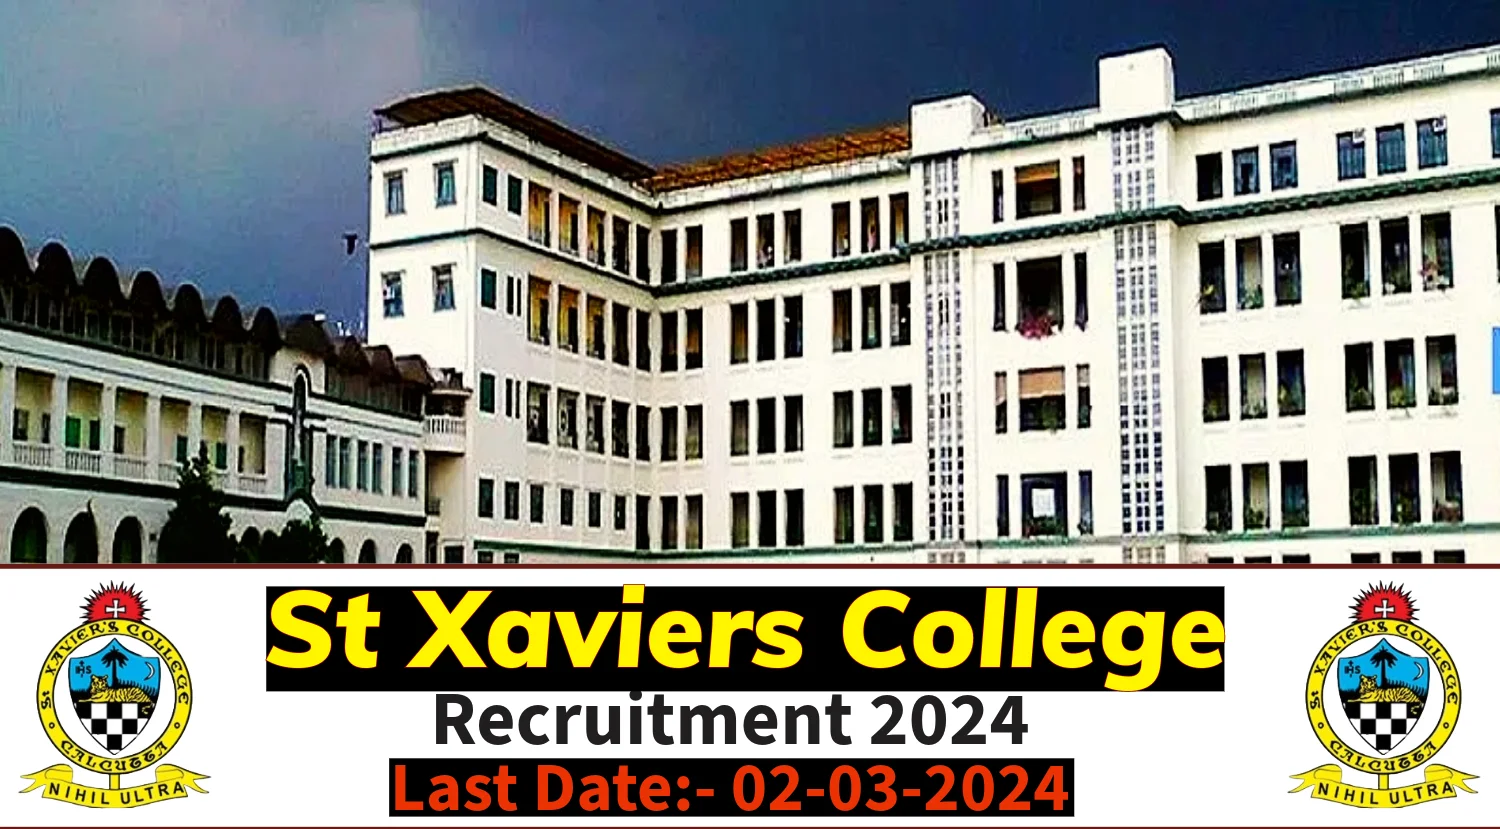 St Xaviers College Recruitment 2024